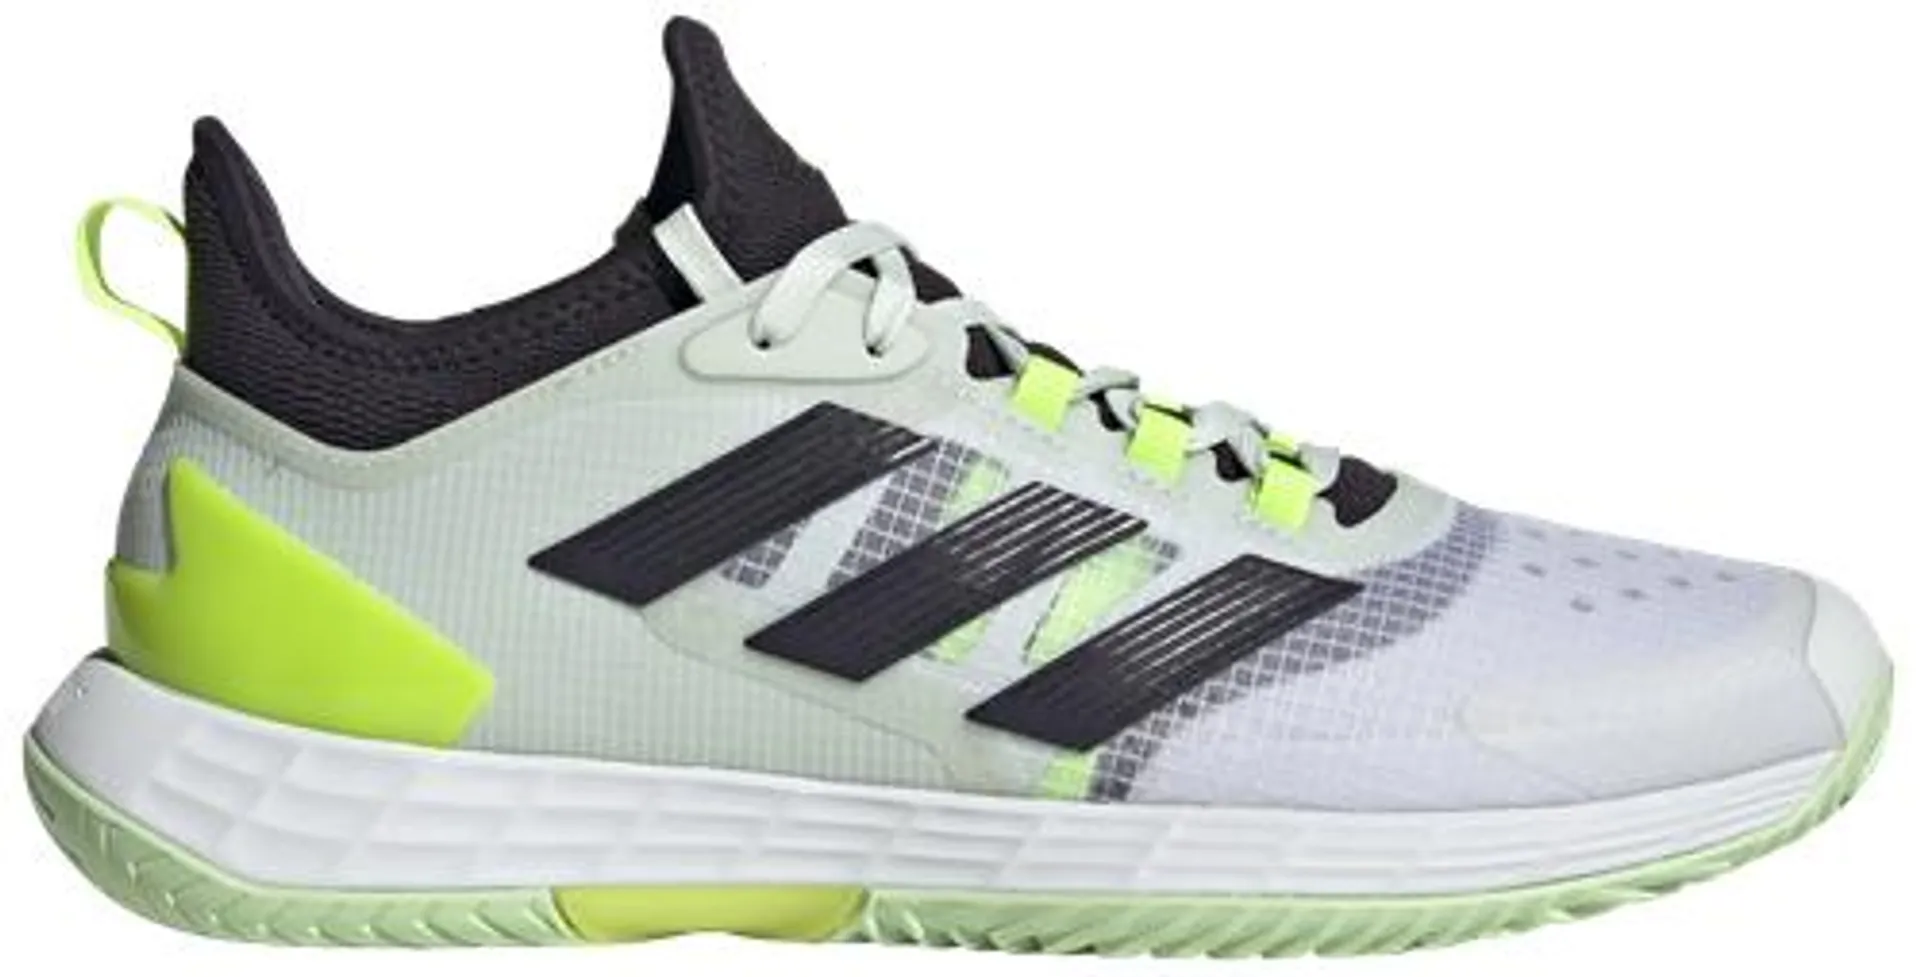 Adidas Adizero Ubersonic 4.1 Men's White/Green/Black